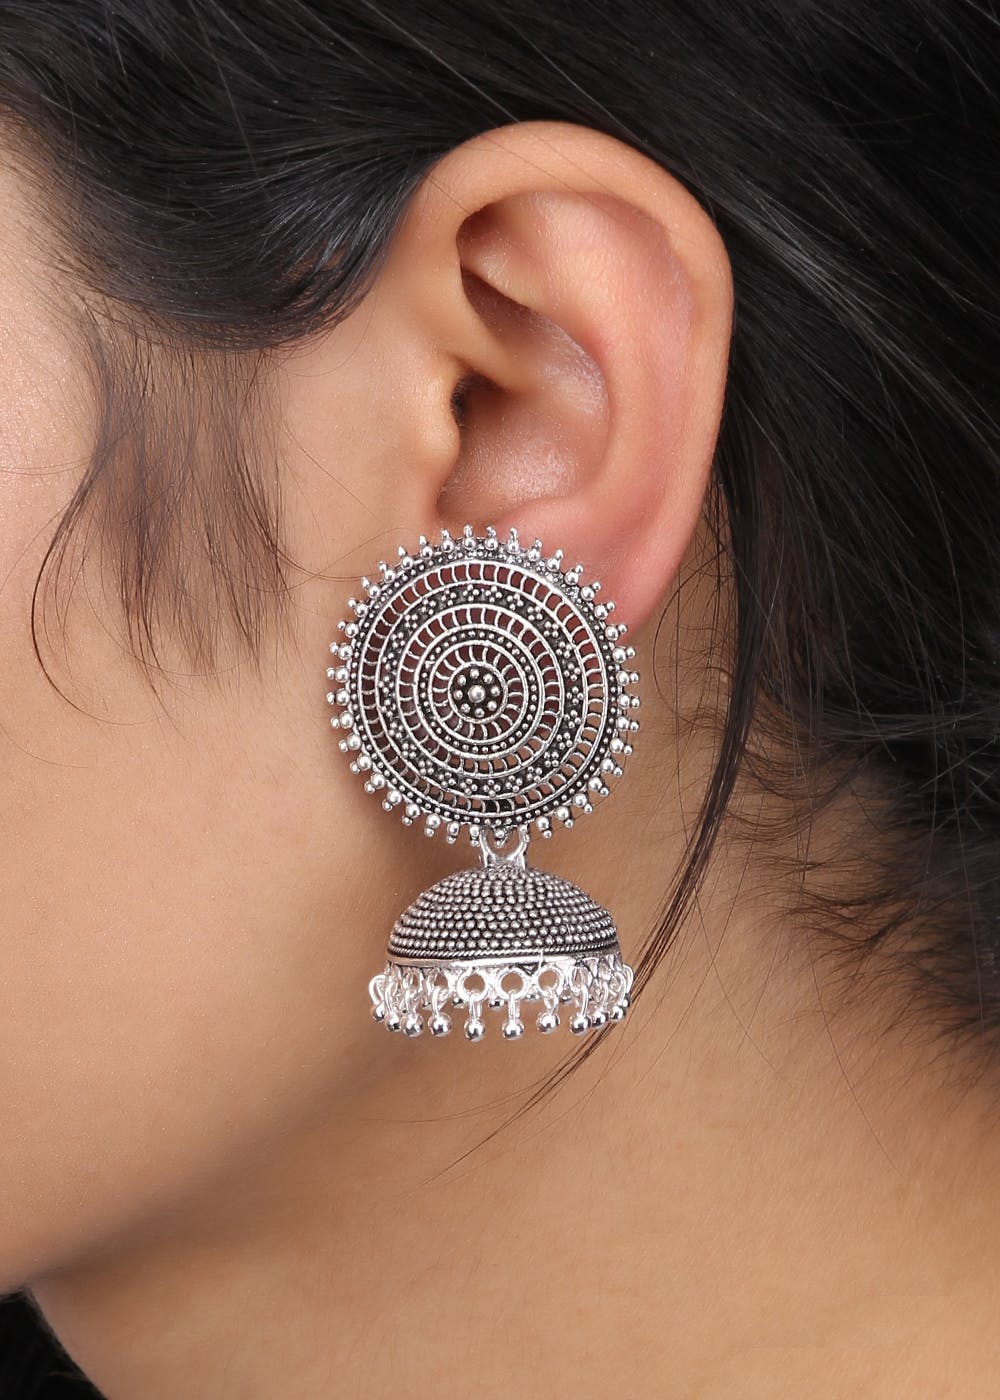 Get Intricate Bohemian Jhumka Earrings at ₹ 299 | LBB Shop